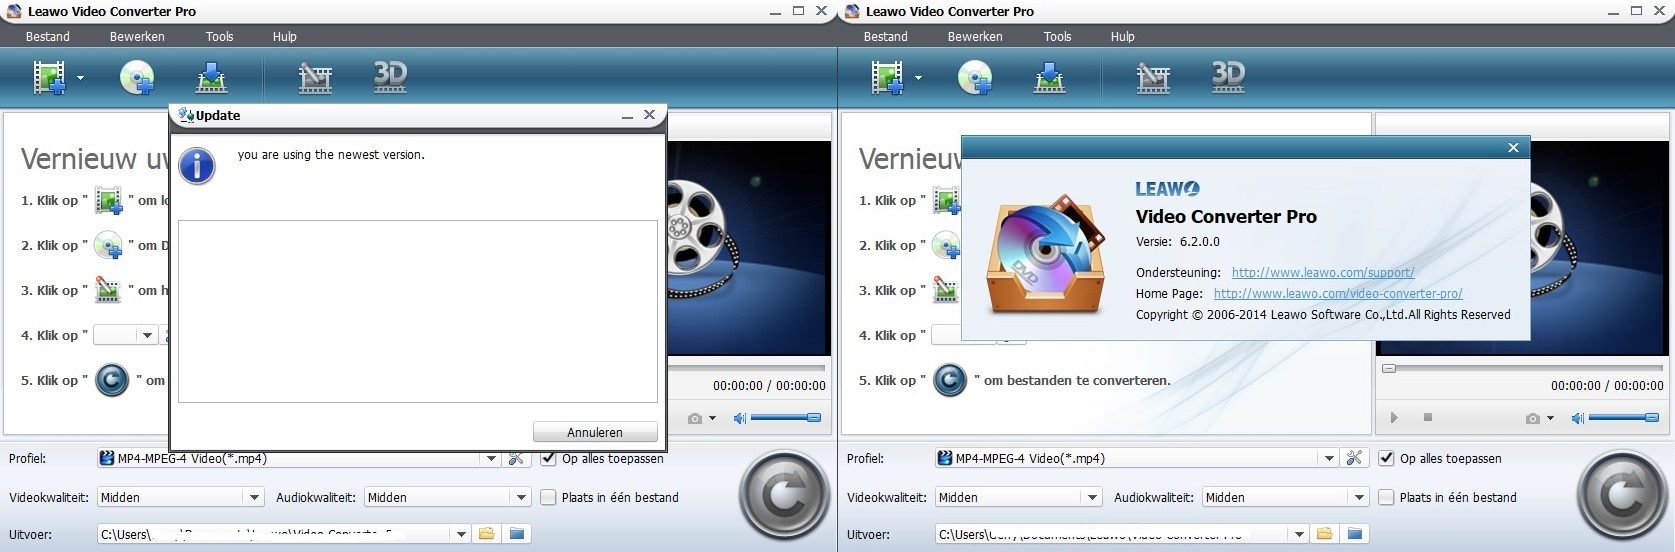 Leawo Video Converter Pro 6.2.0.0 (Multilingual)